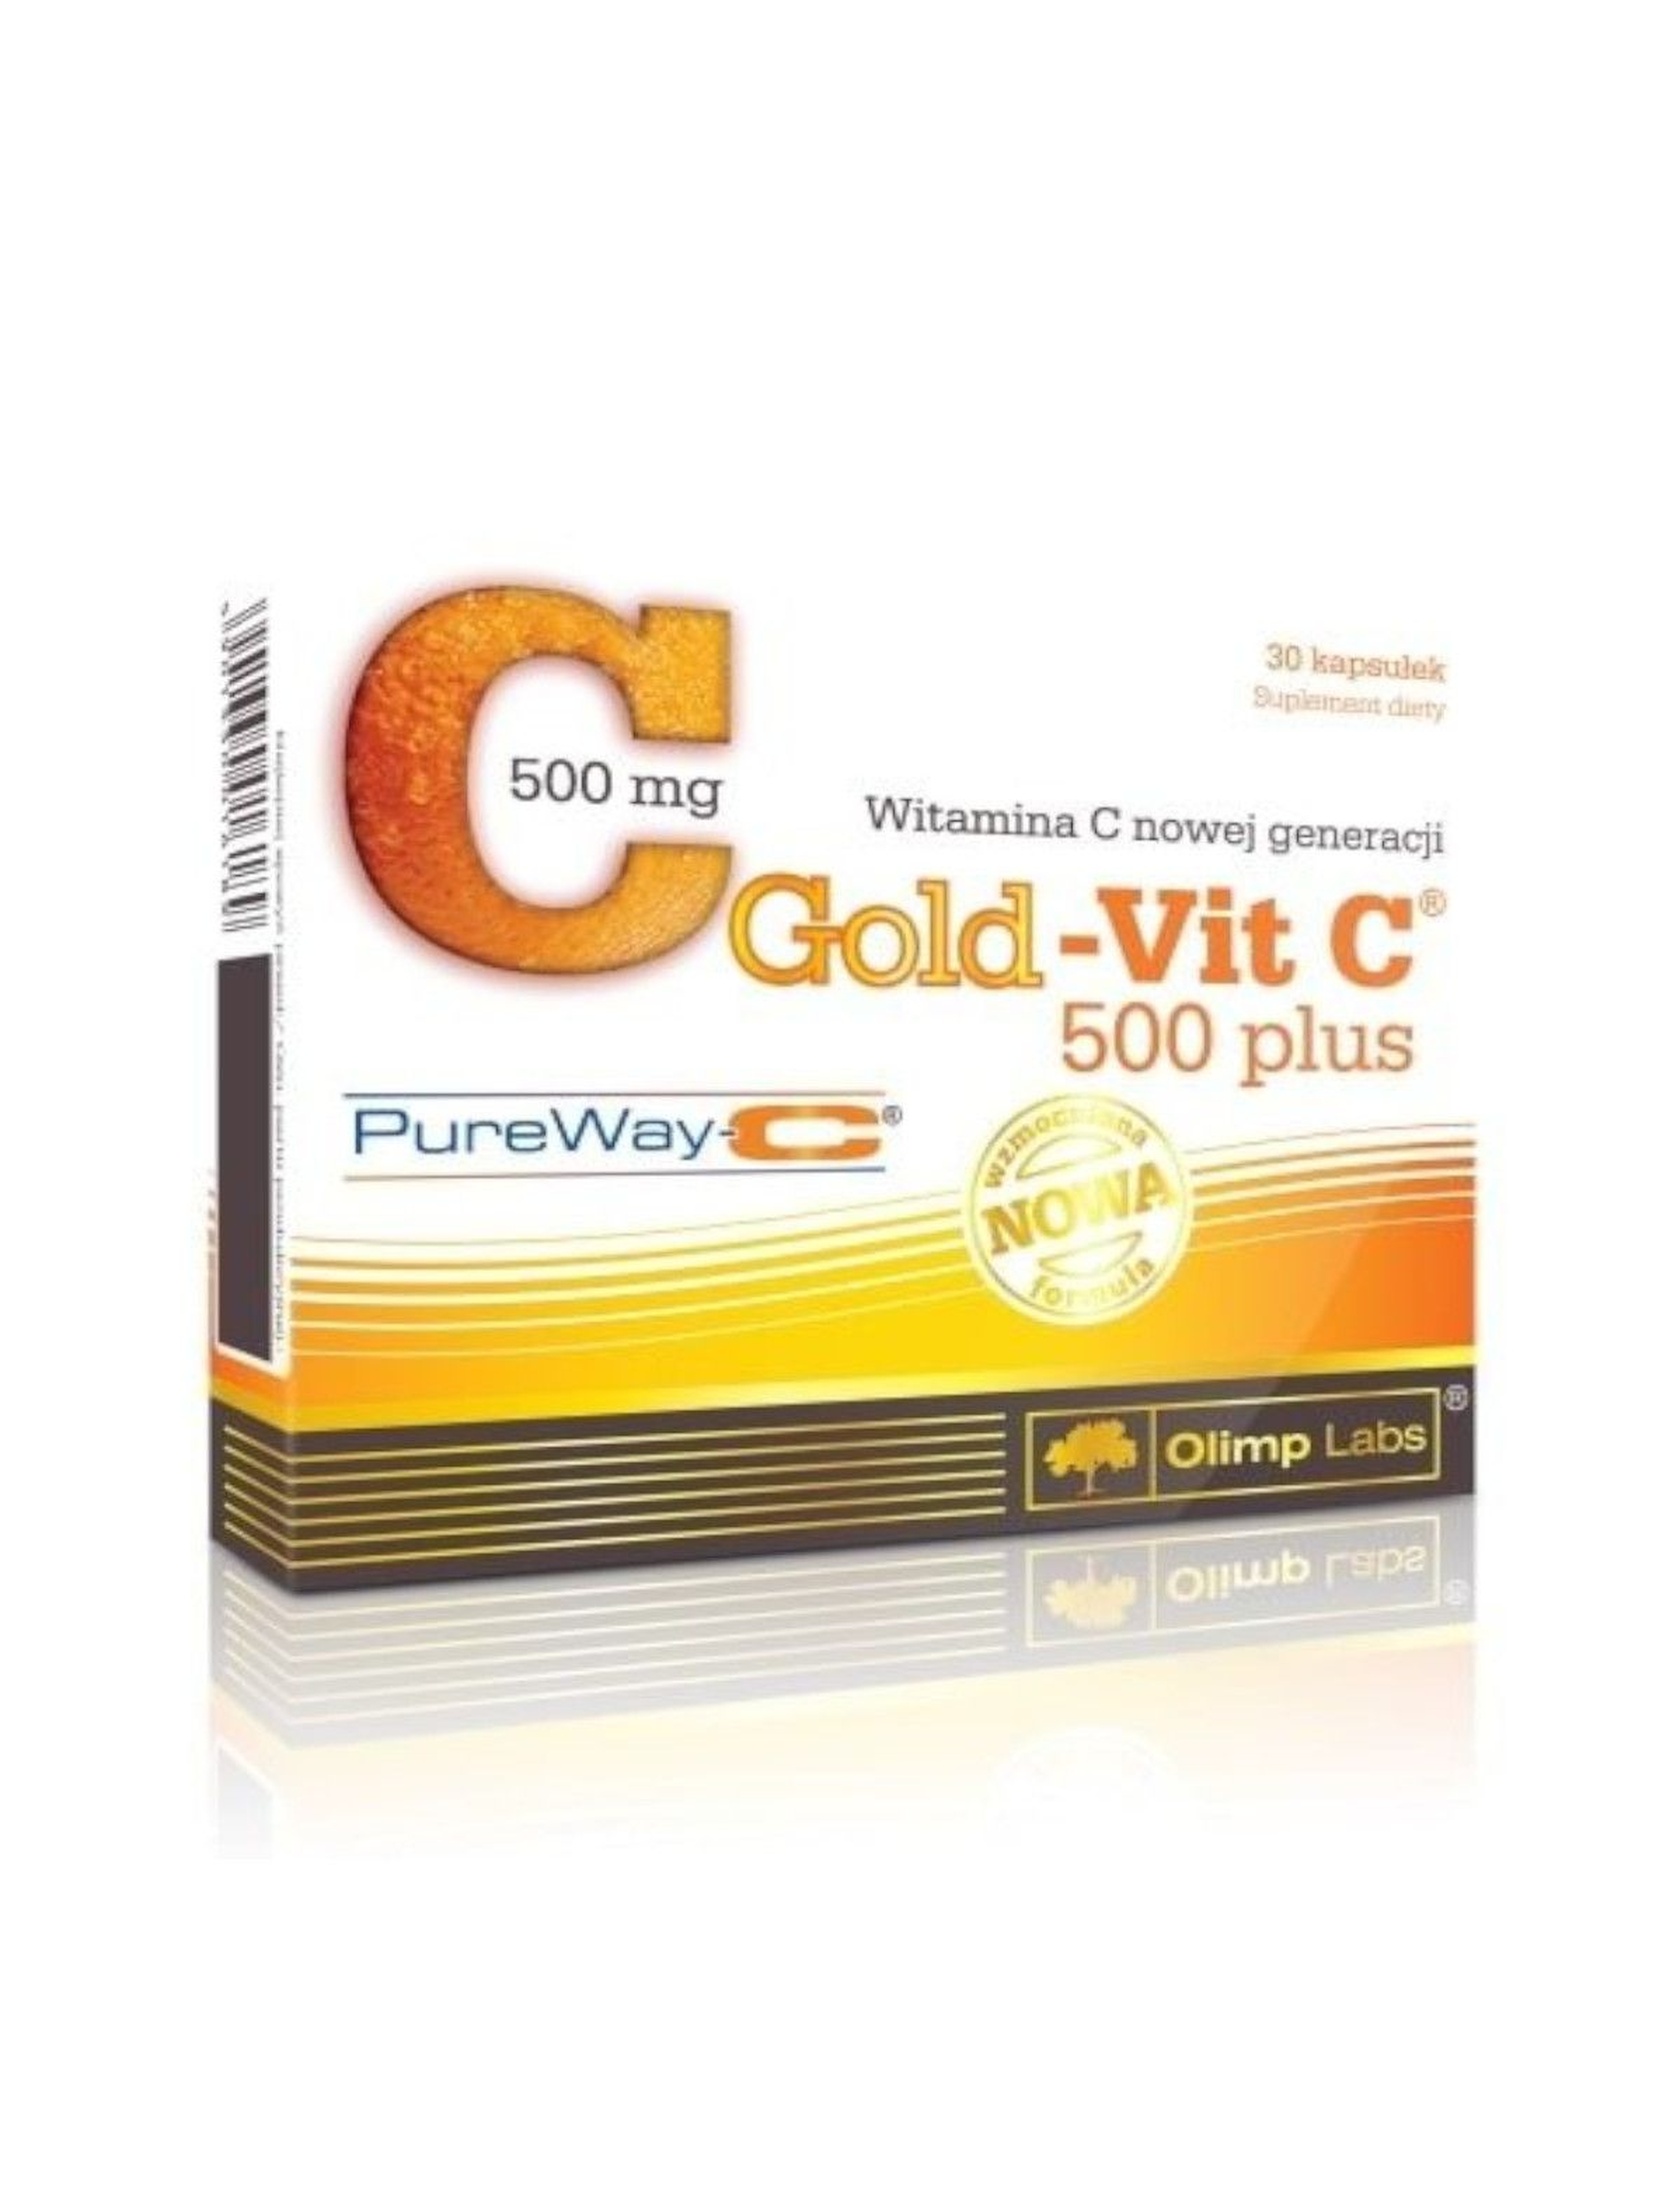 Gold Vit C 500 Plus (Pure Way C)- 30 kapsułki  TOP